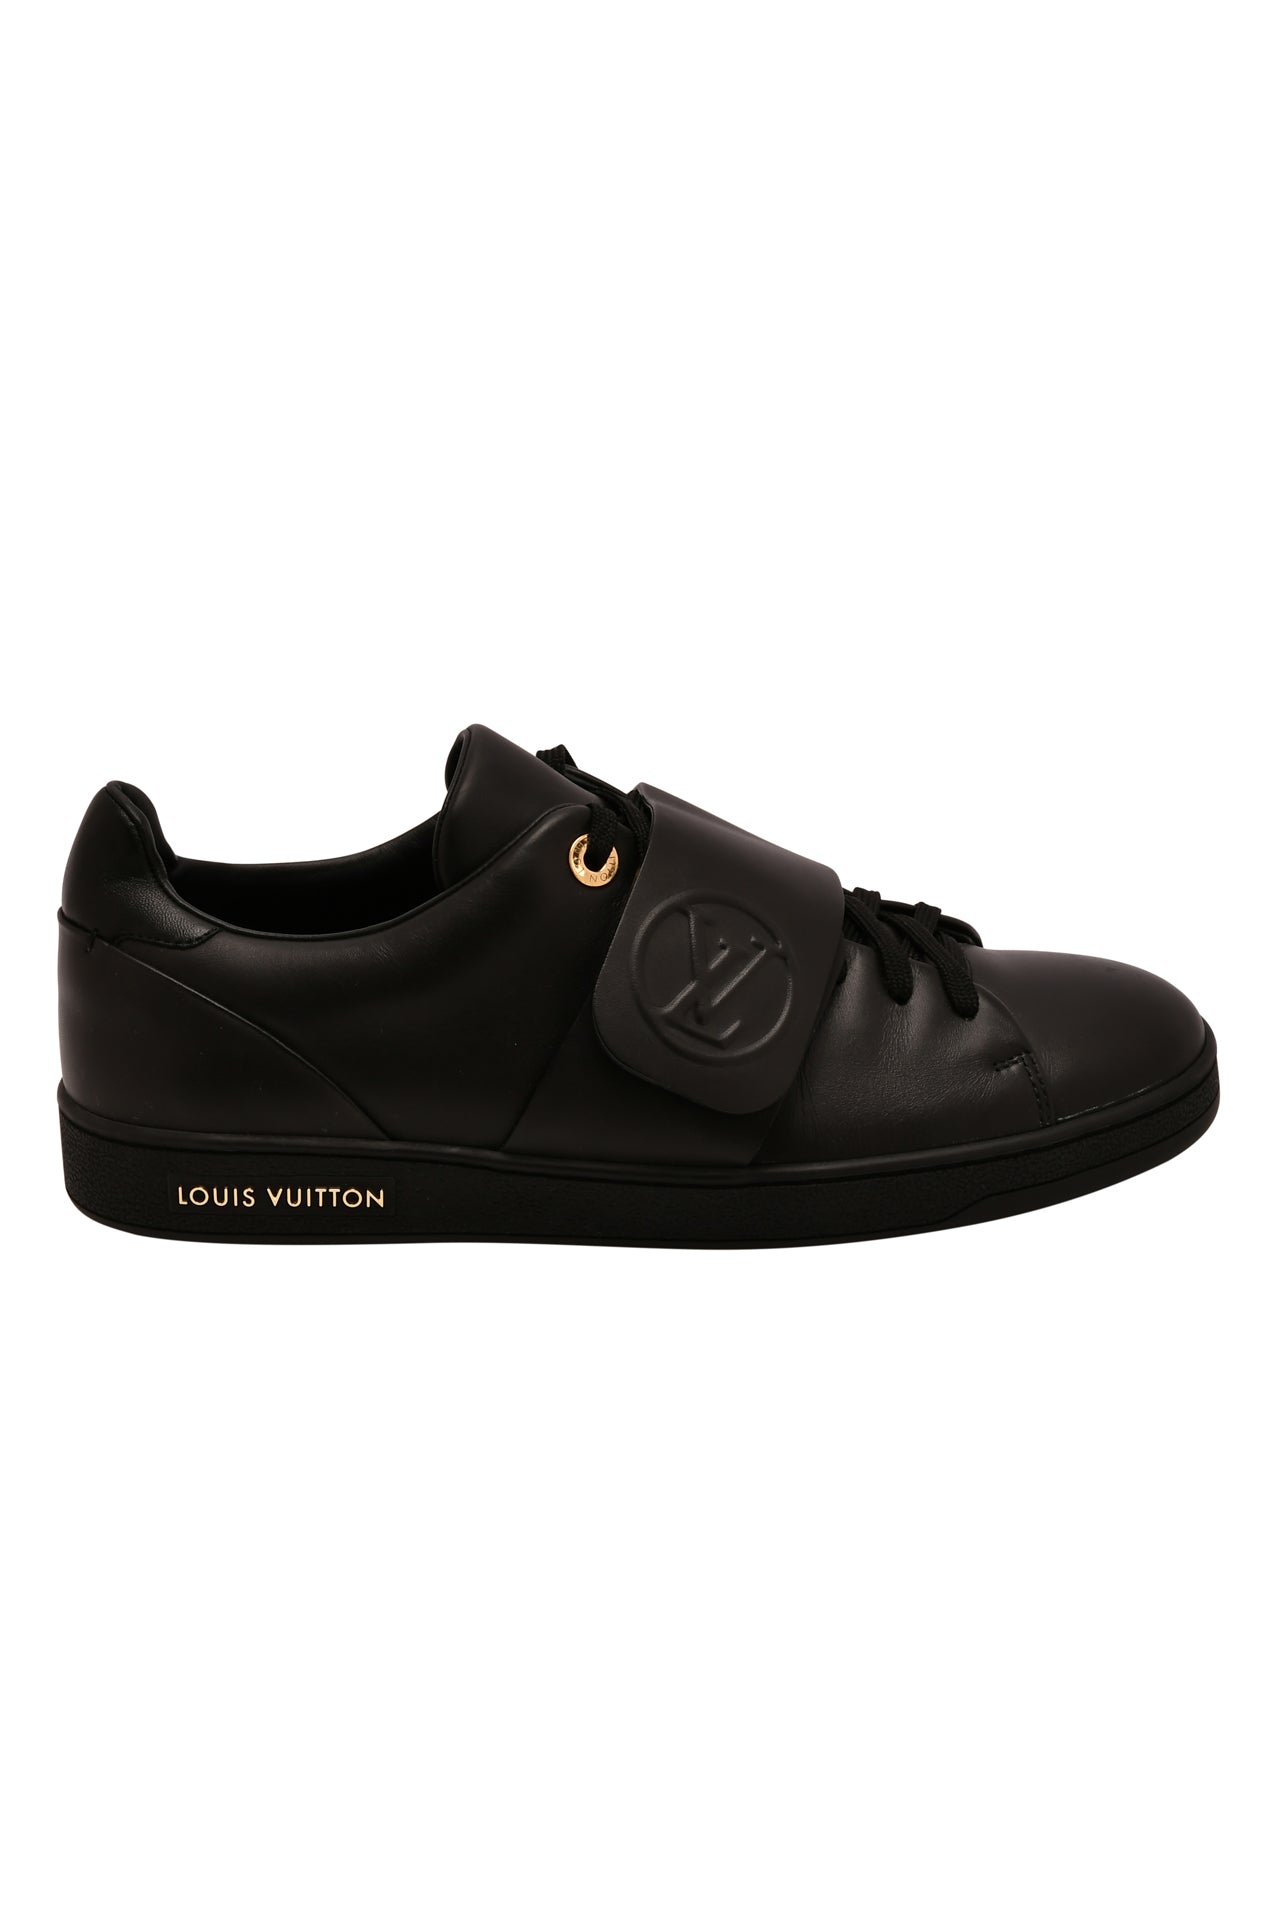 Louis Vuitton Black Frontrow Leather Trainers EU 40